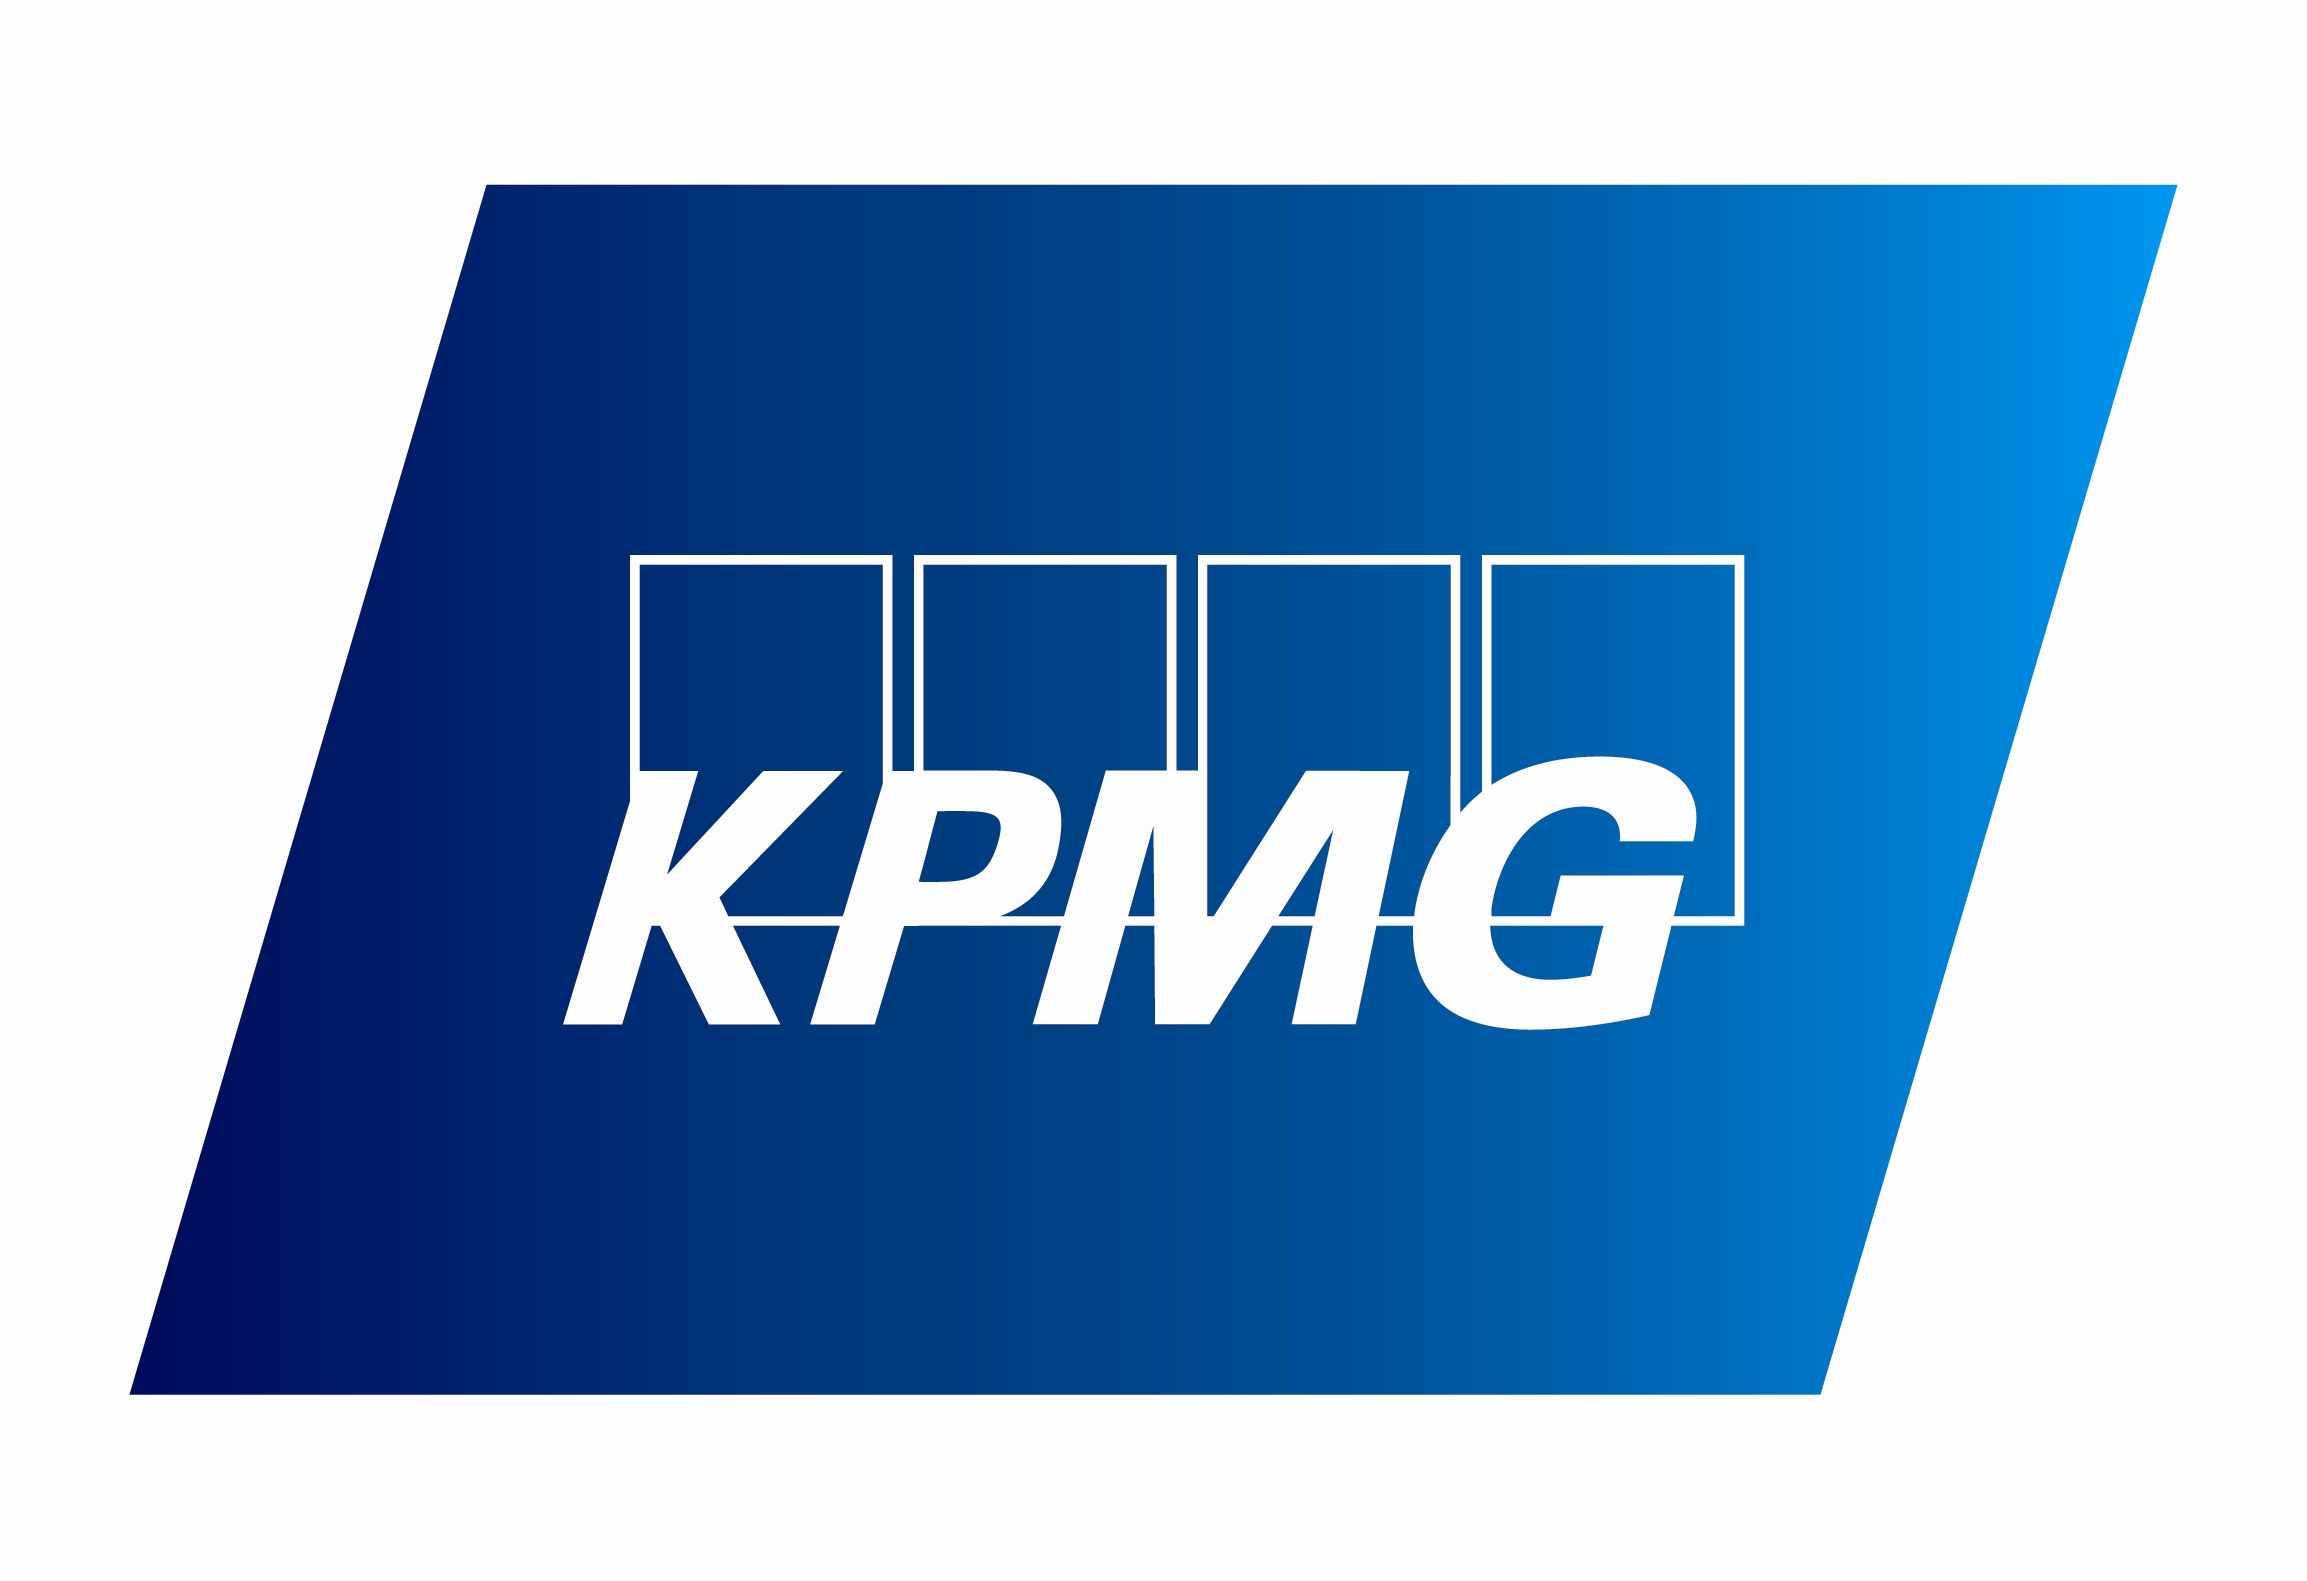 Мастер-класс «Действия HR в условиях пандемии» от компании KPMG